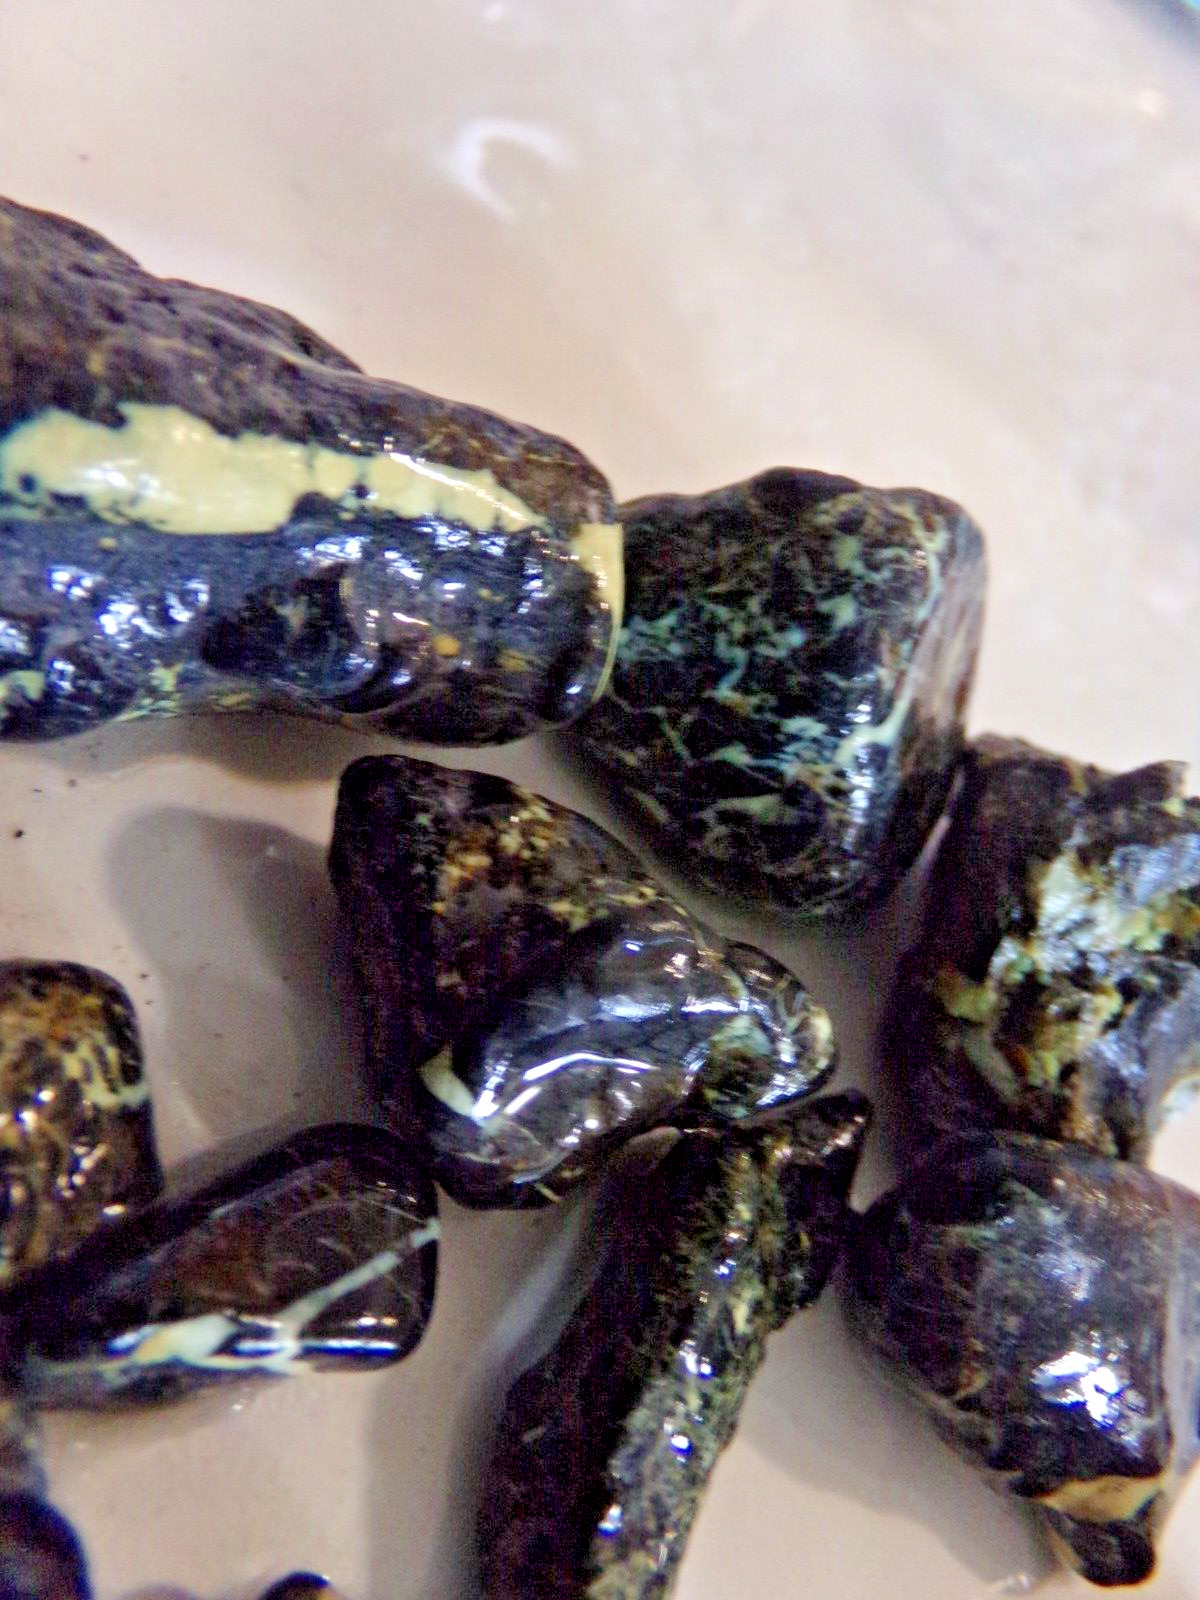 Turquoise from Lander Co. Nv Yellow & Black Tumbled & Rough 188g Damele